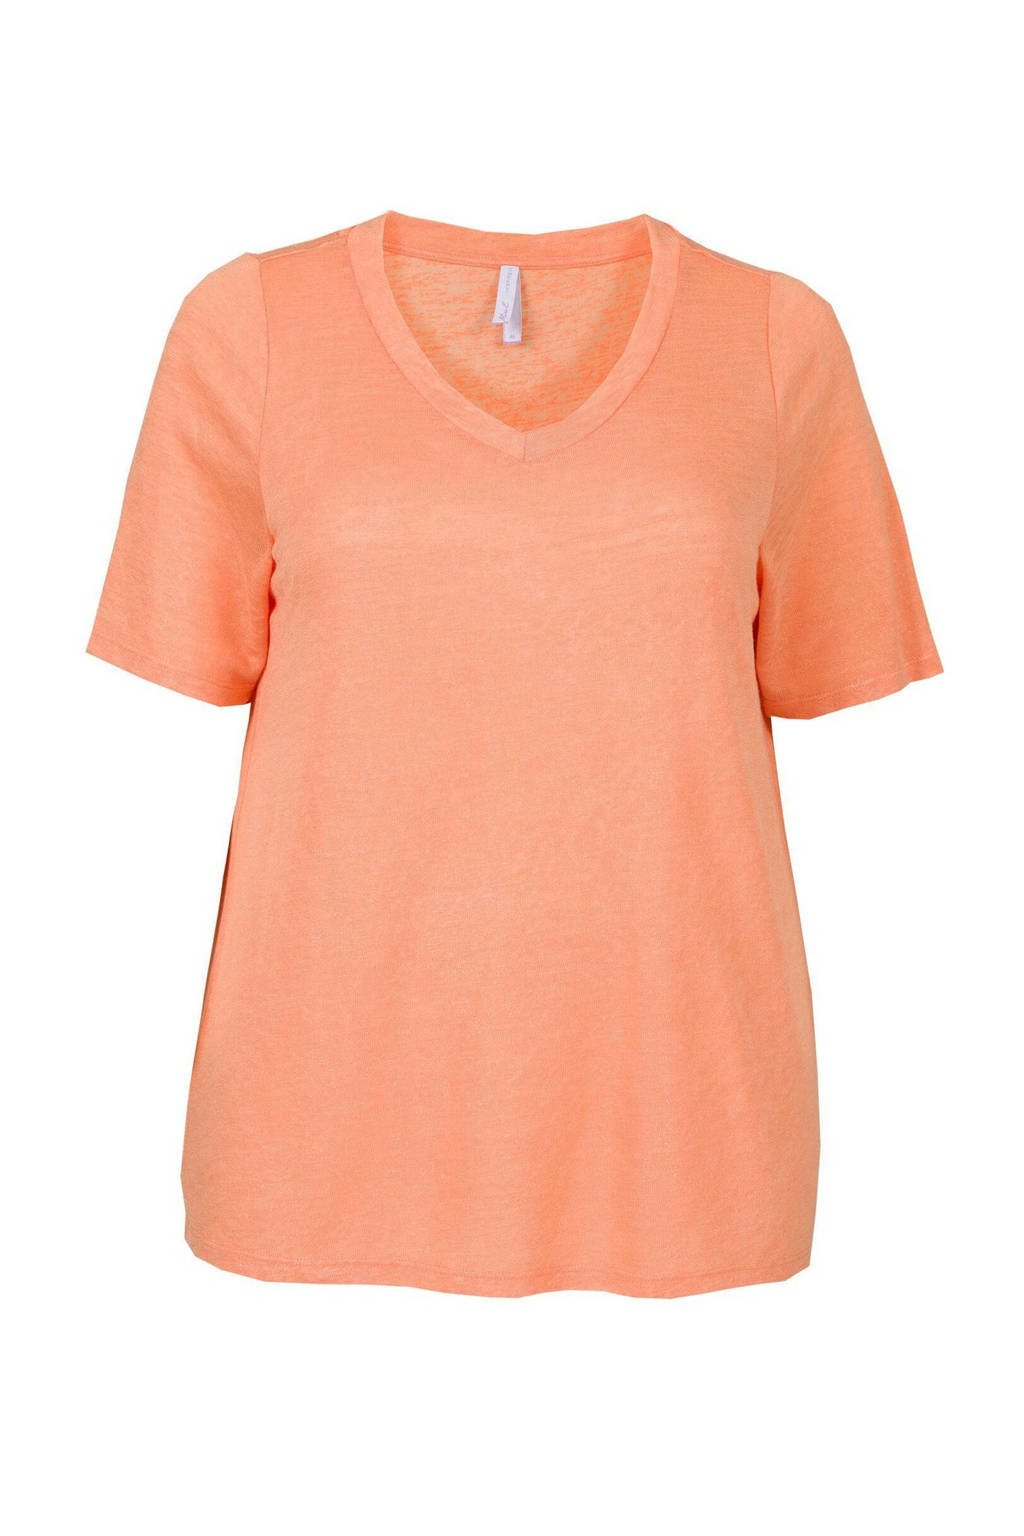 Miss Etam Plus T-shirt oranje, Oranje